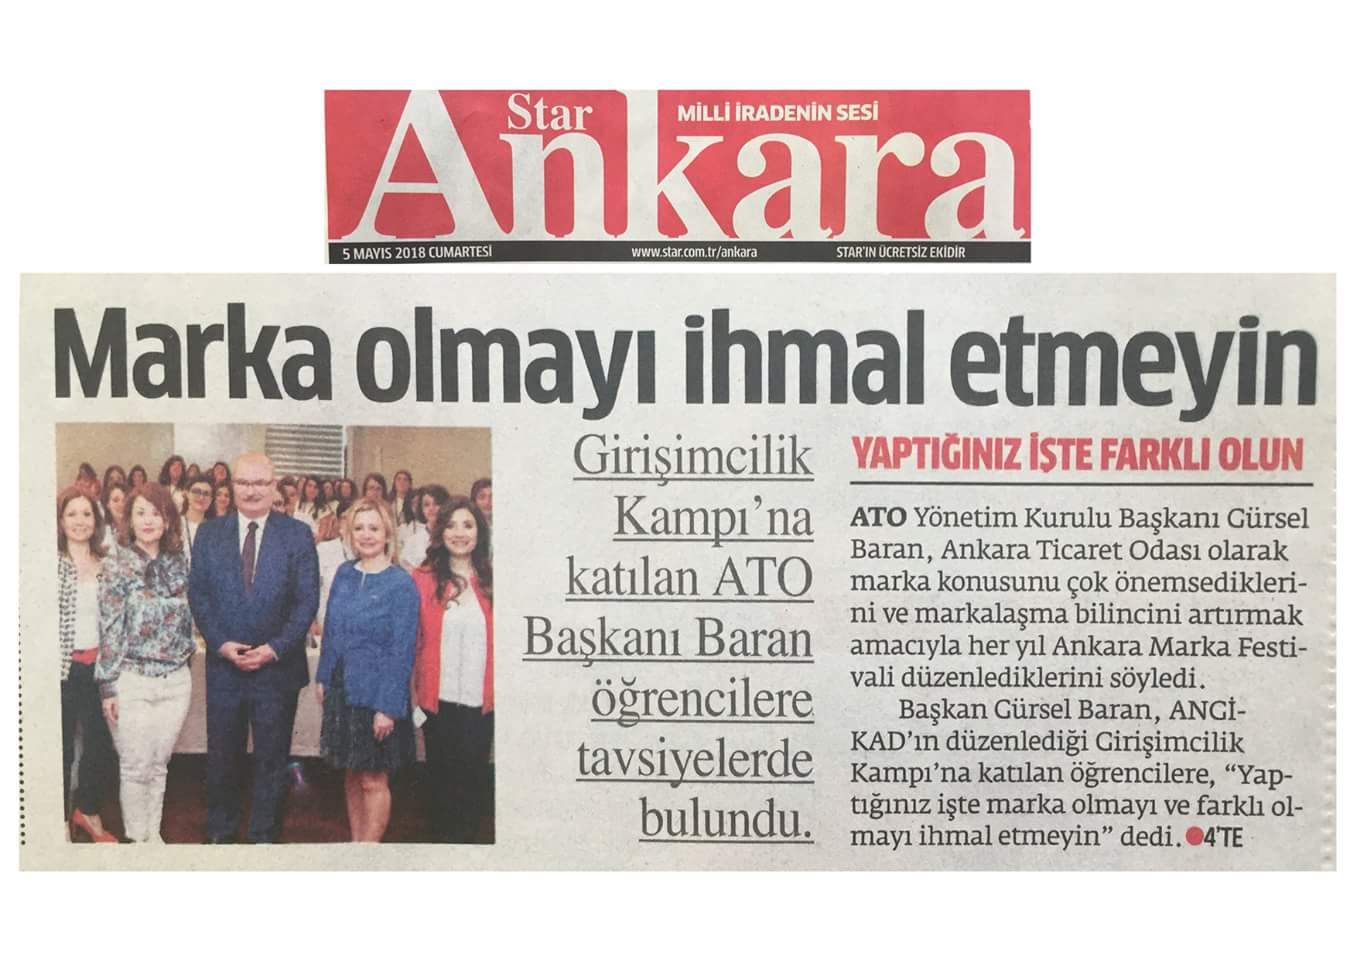 Star Ankara - Marka Olmayı İhmal Etmeyin